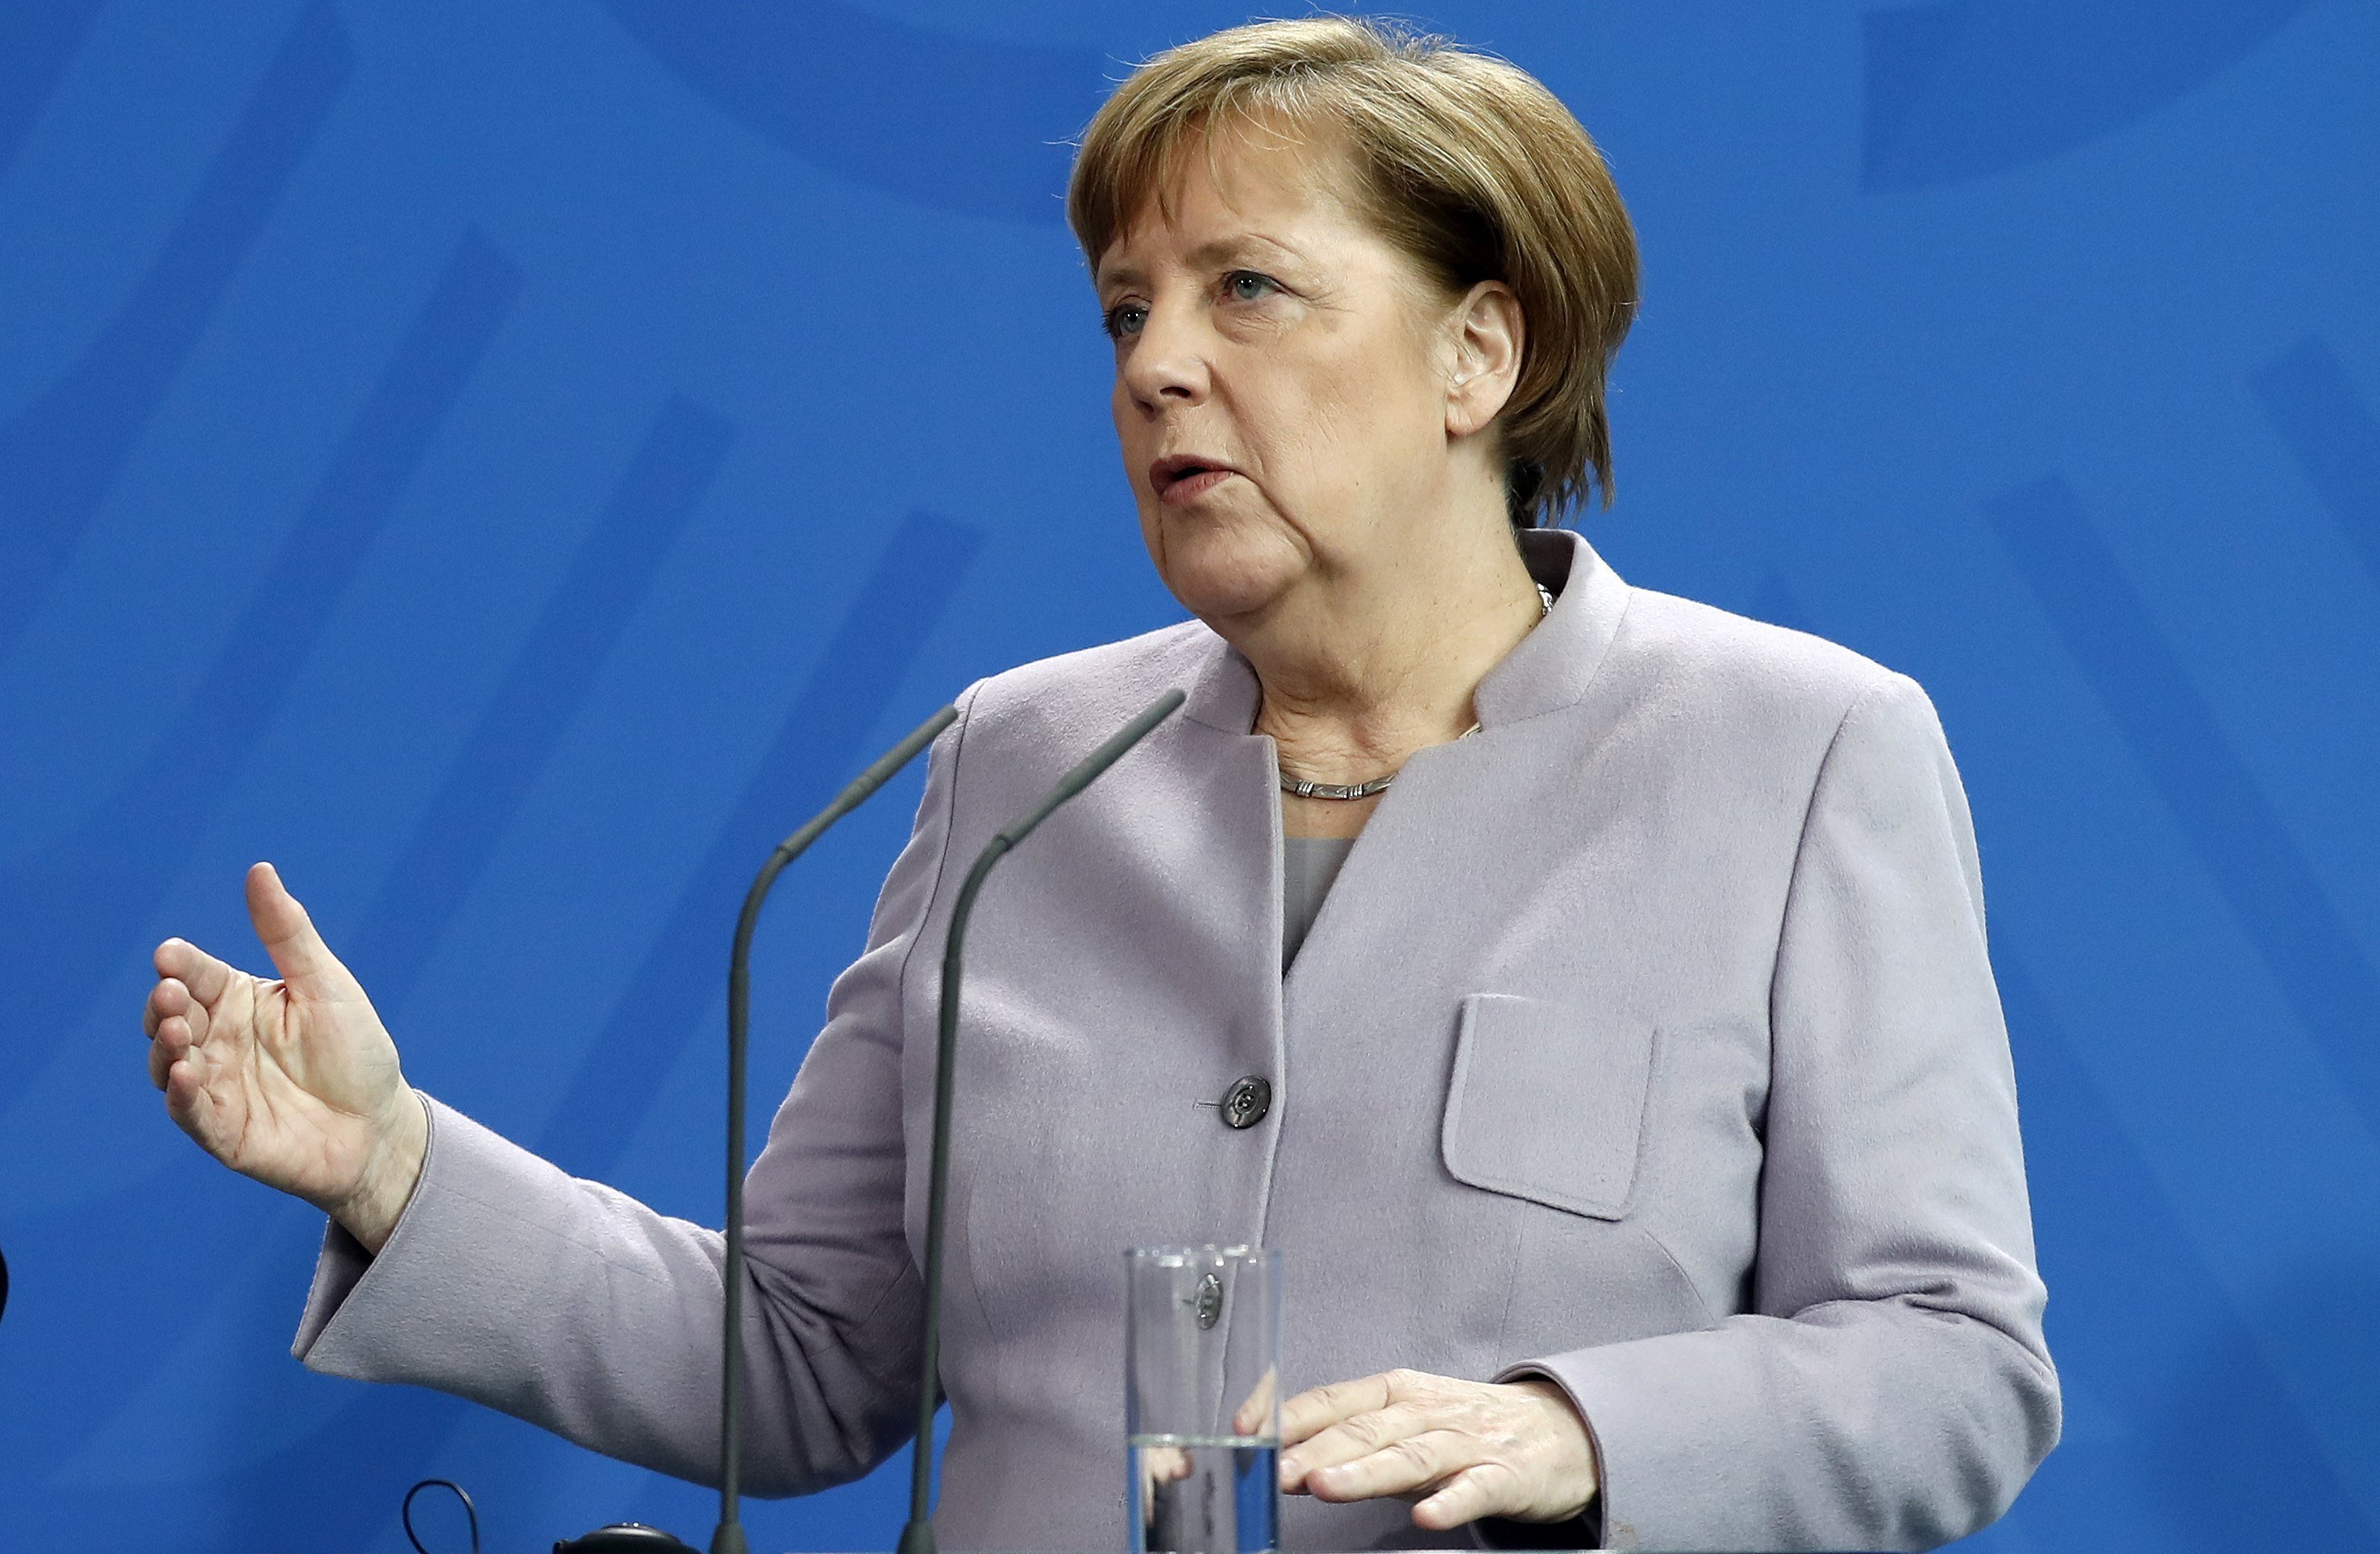 TV3 confirma que Merkel llamó a Juncker y Rajoy sobre Catalunya